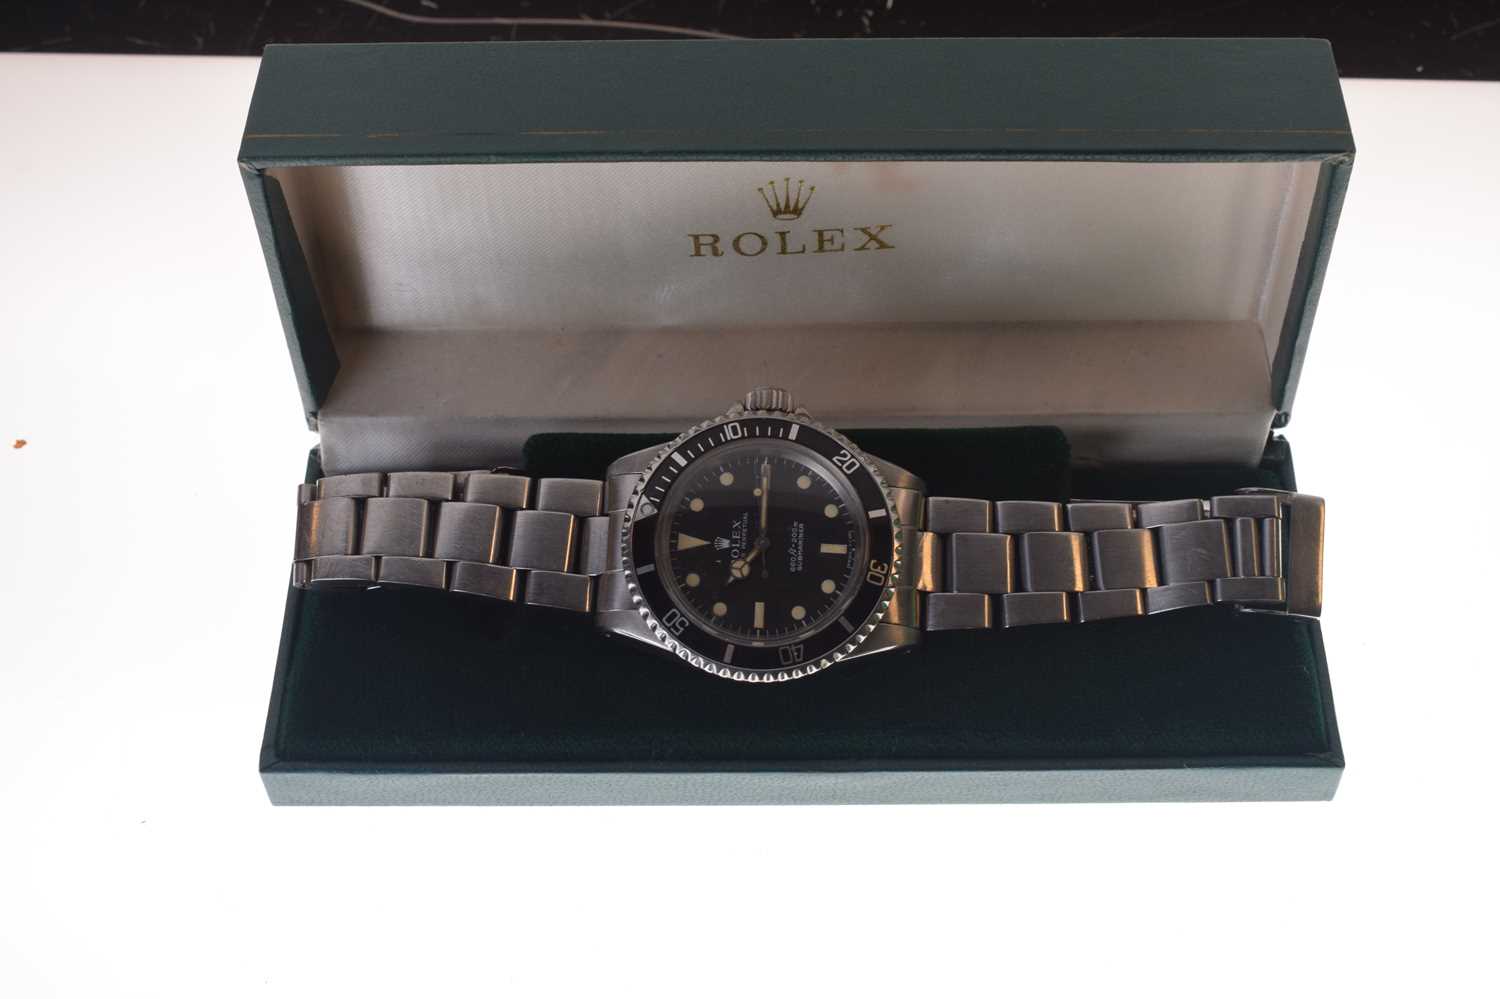 Rolex - Gentleman's Oyster Perpetual Submariner wristwatch, ref.5513 - Image 2 of 38